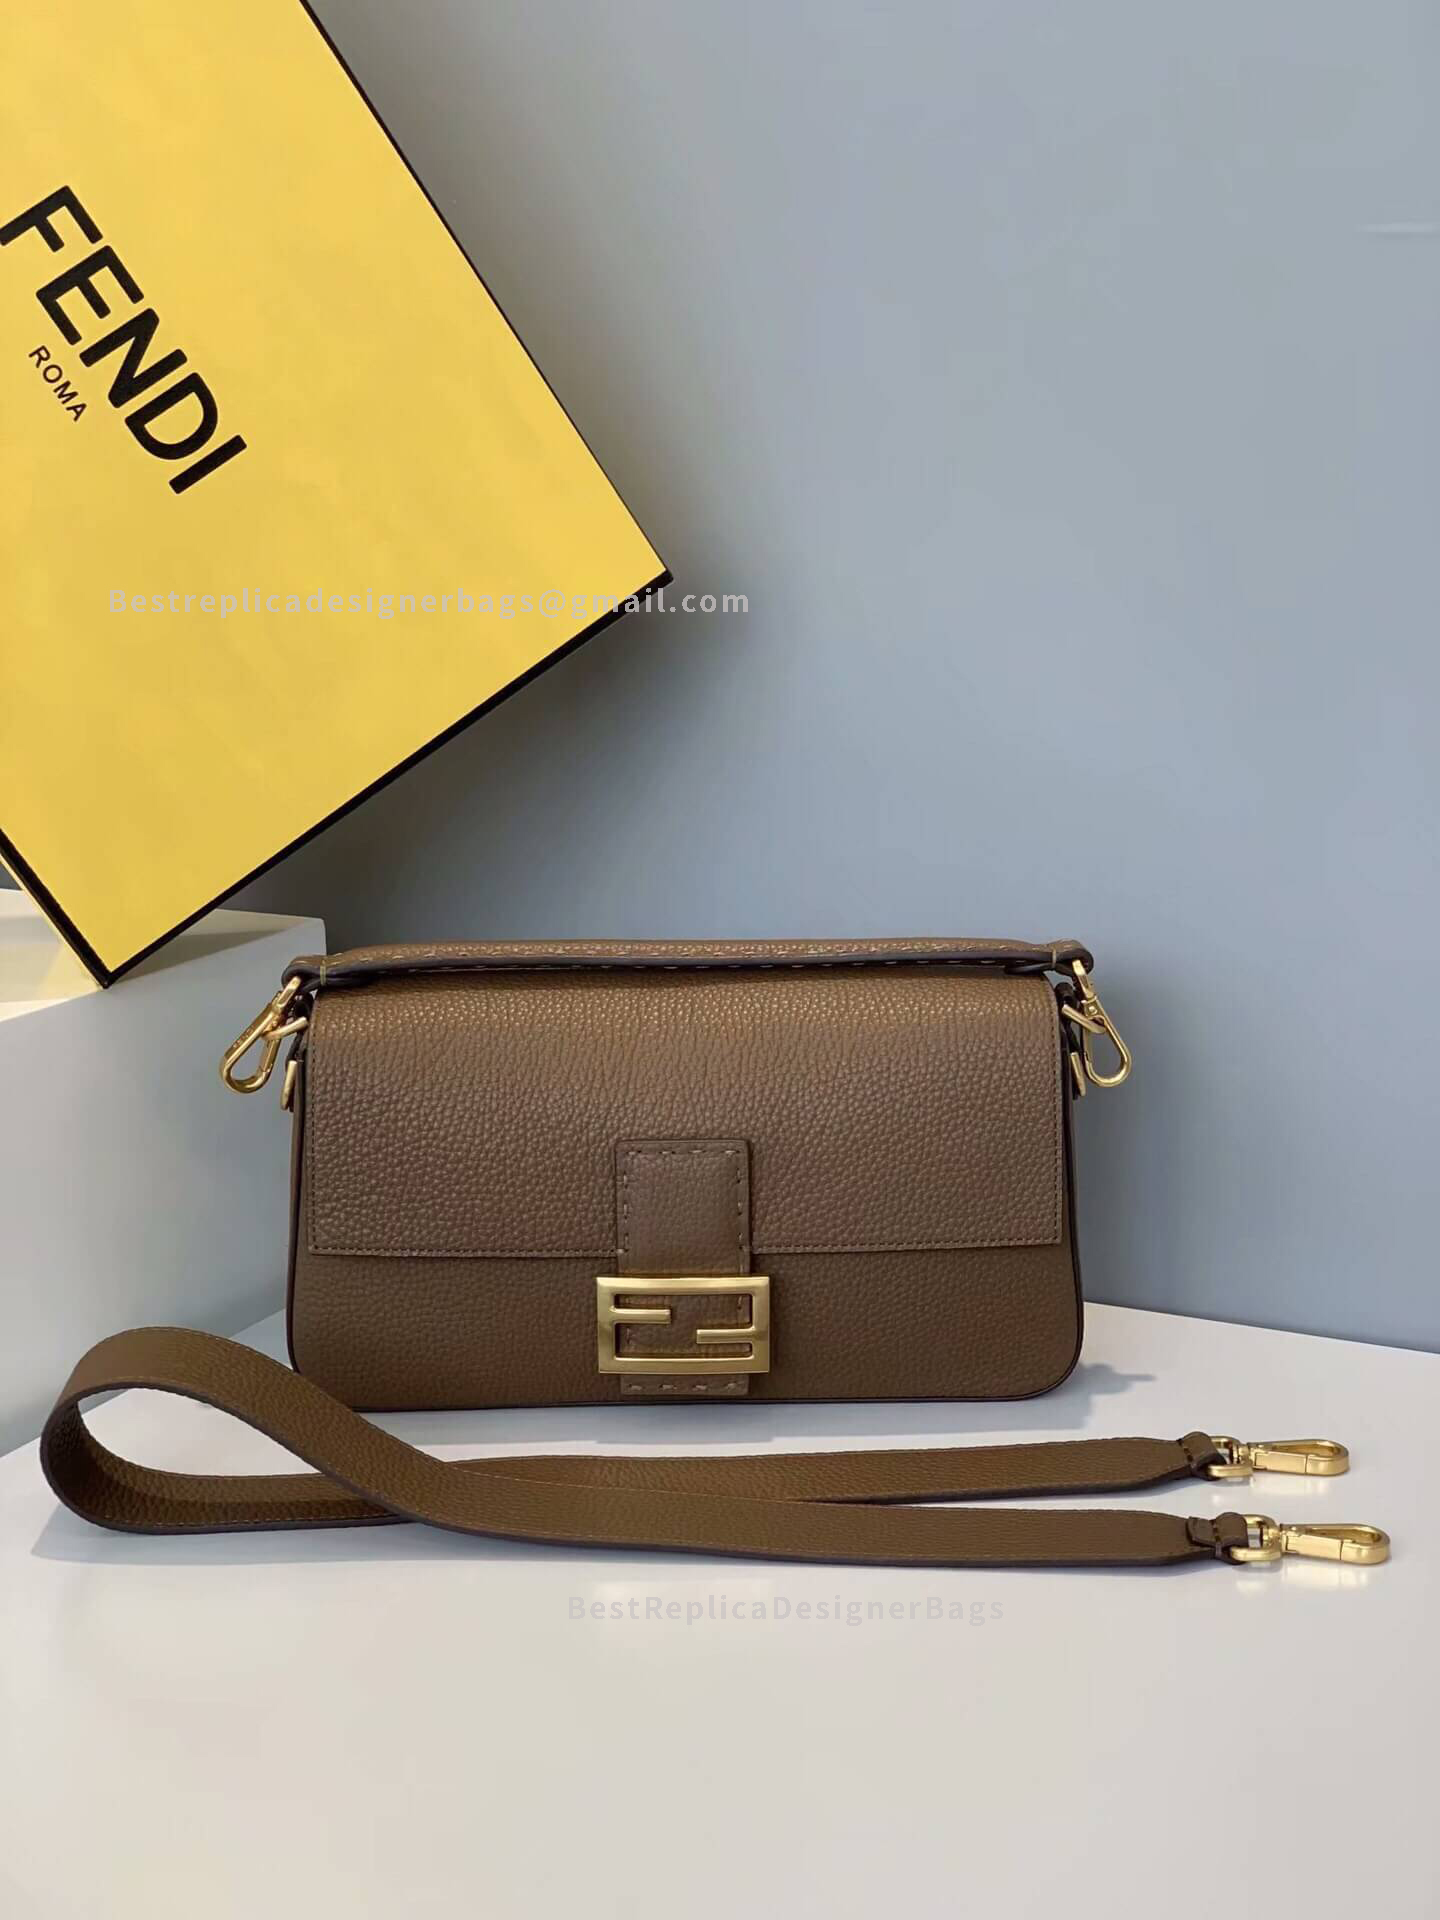 Fendi Baguette Medium Brown Leather Bag GHW 306M